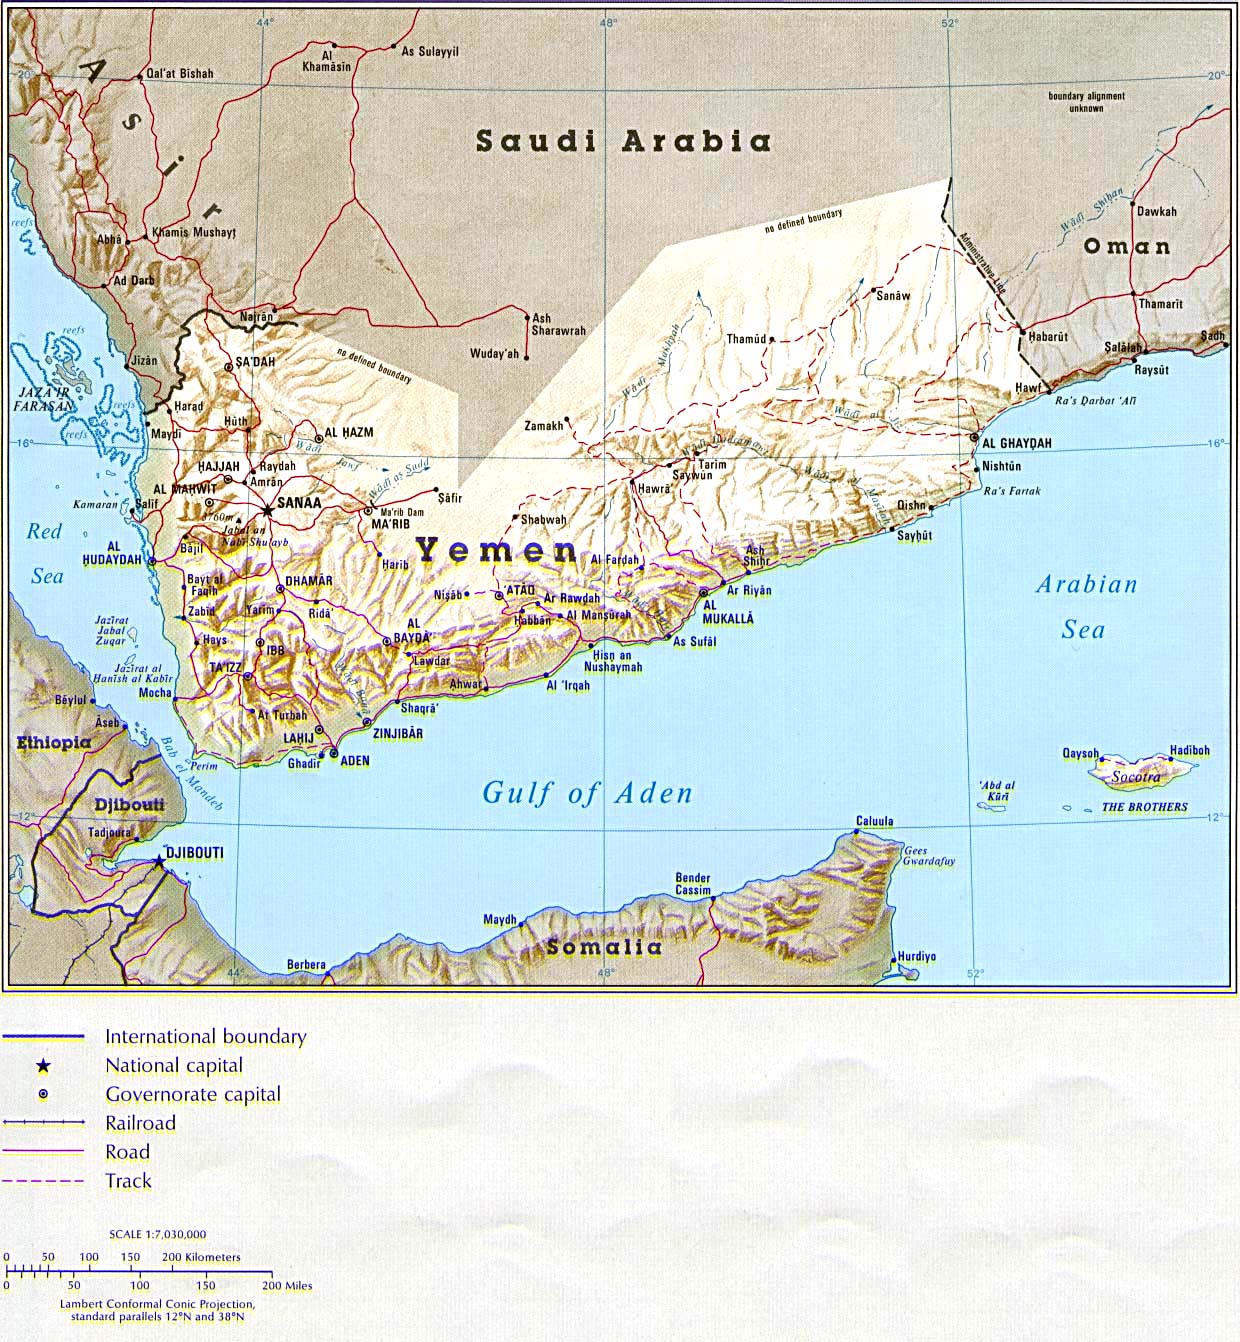 Mapa de Relieve Sombreado de Yemen